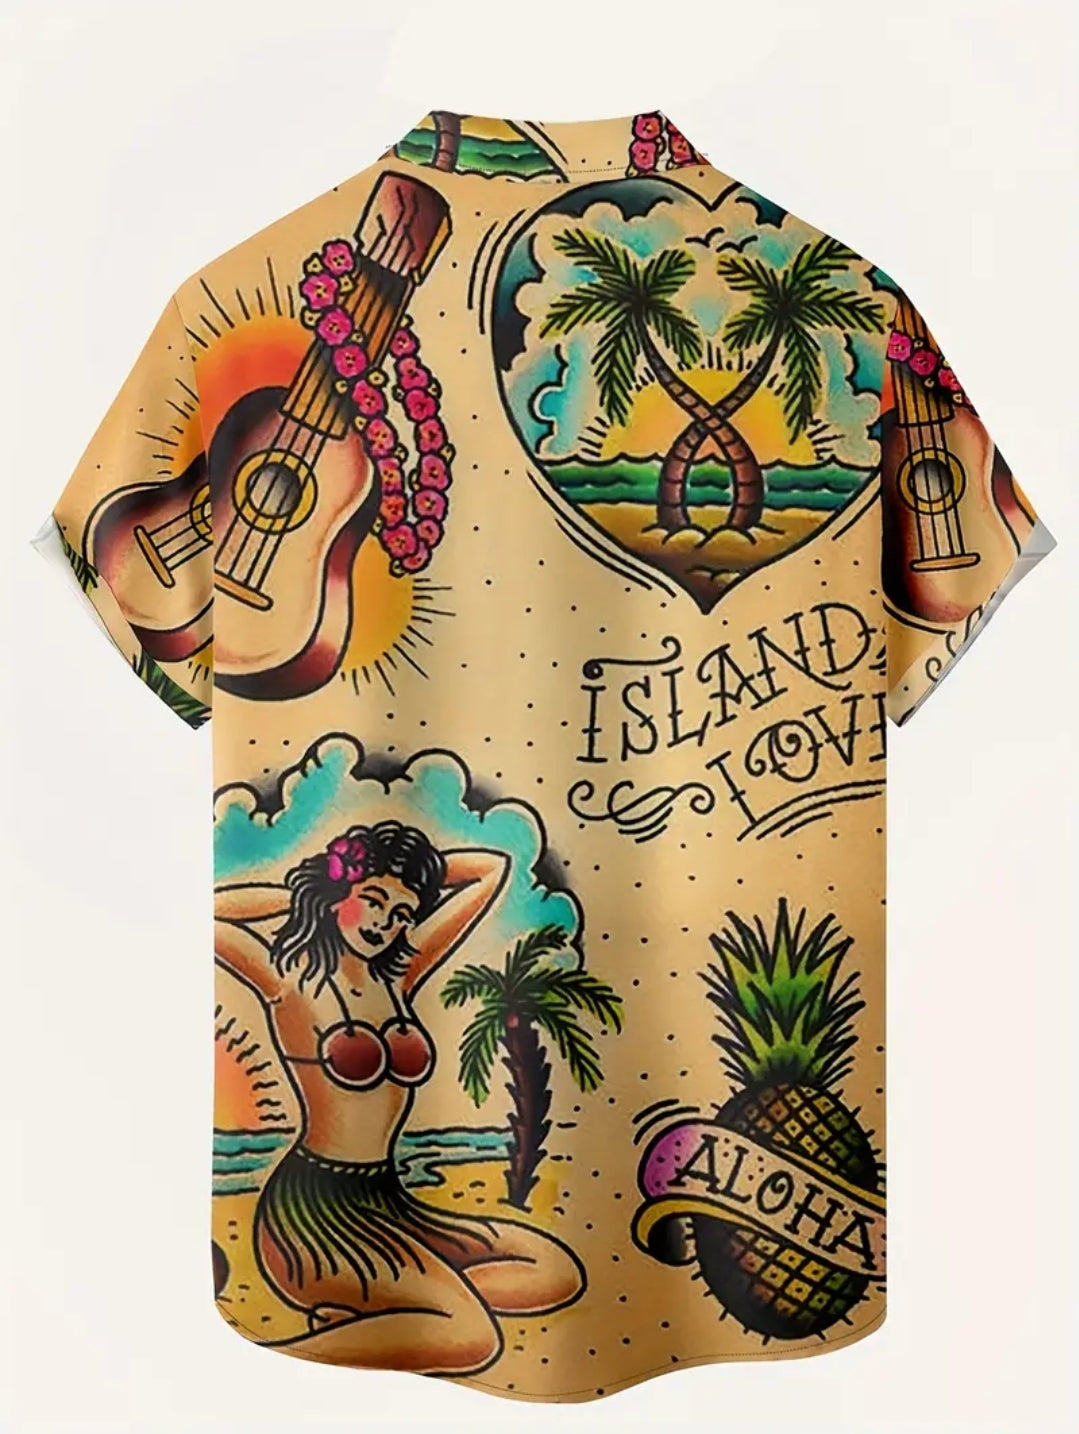 Hawaiian Print Button Up Shirt